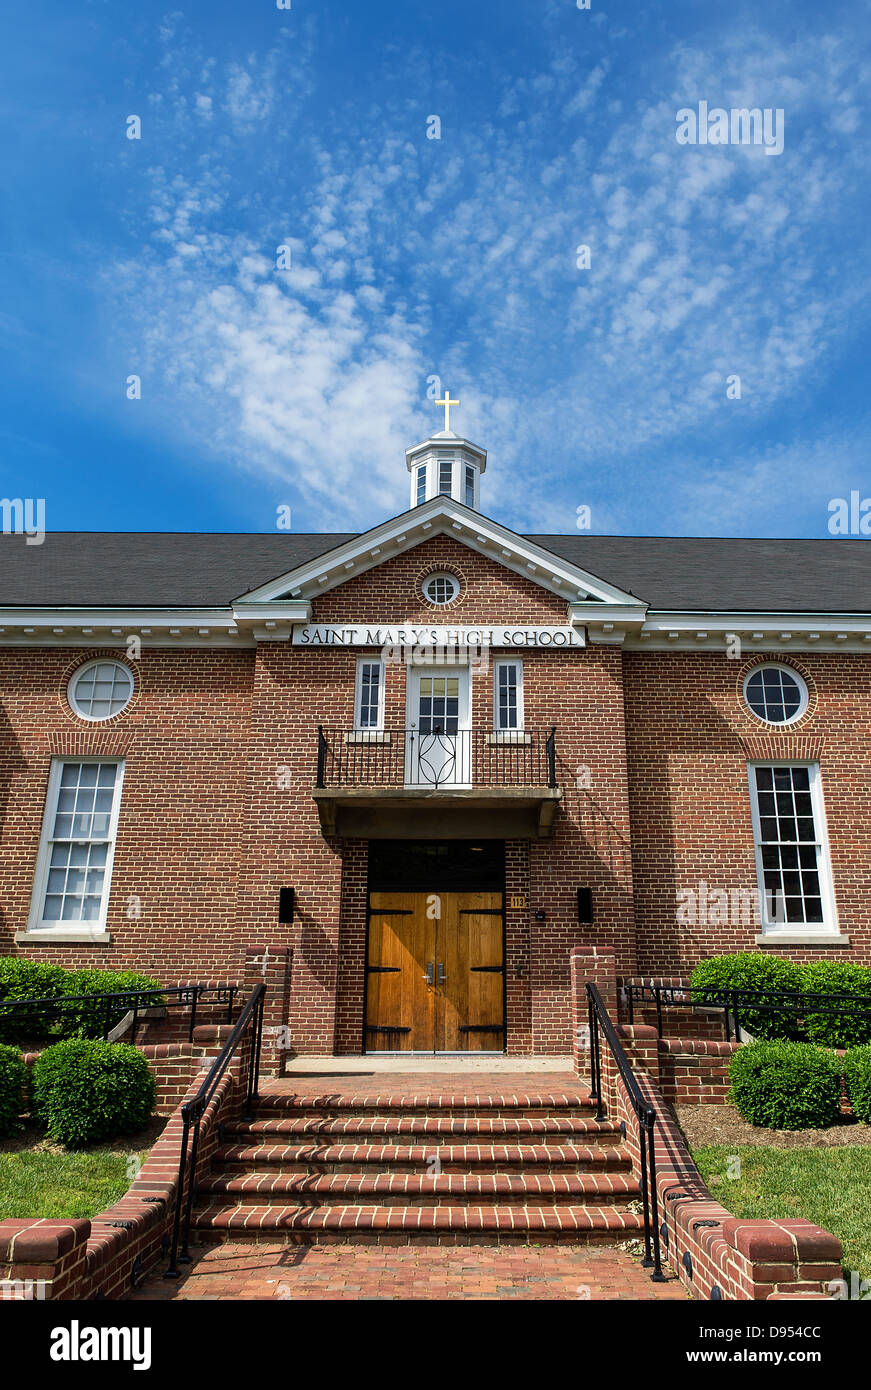 Str. Marys High-School, Annapolis, Maryland, USA Stockfoto